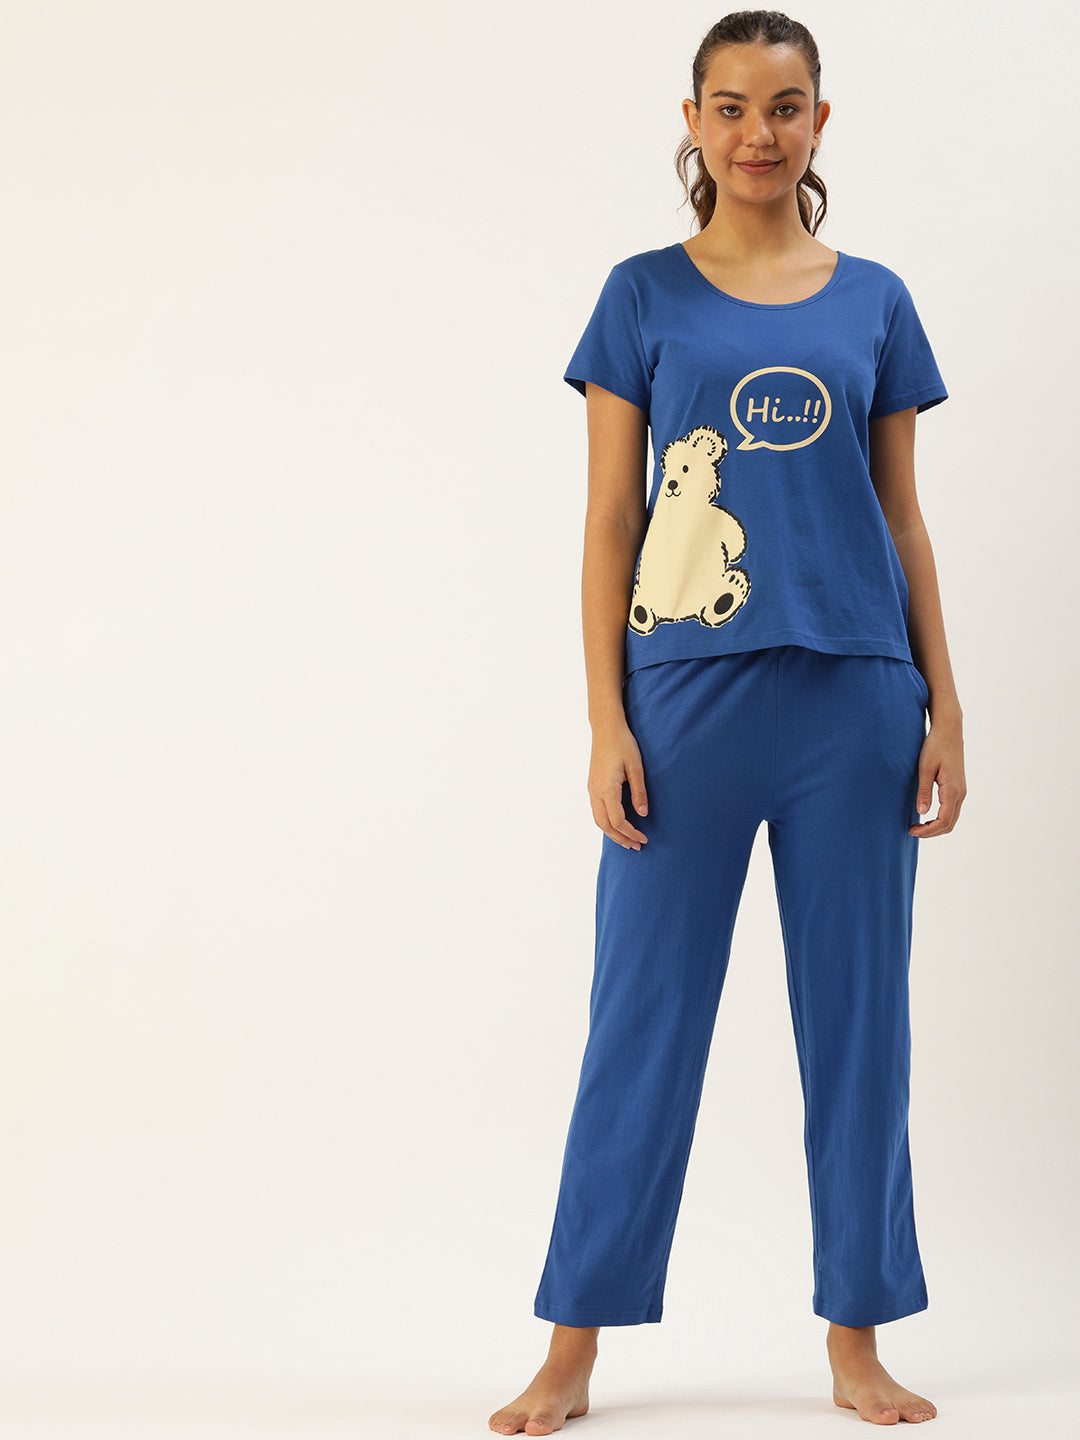 Cuddly Teddy Bear Printed Pyjama Set - 100% Cotton